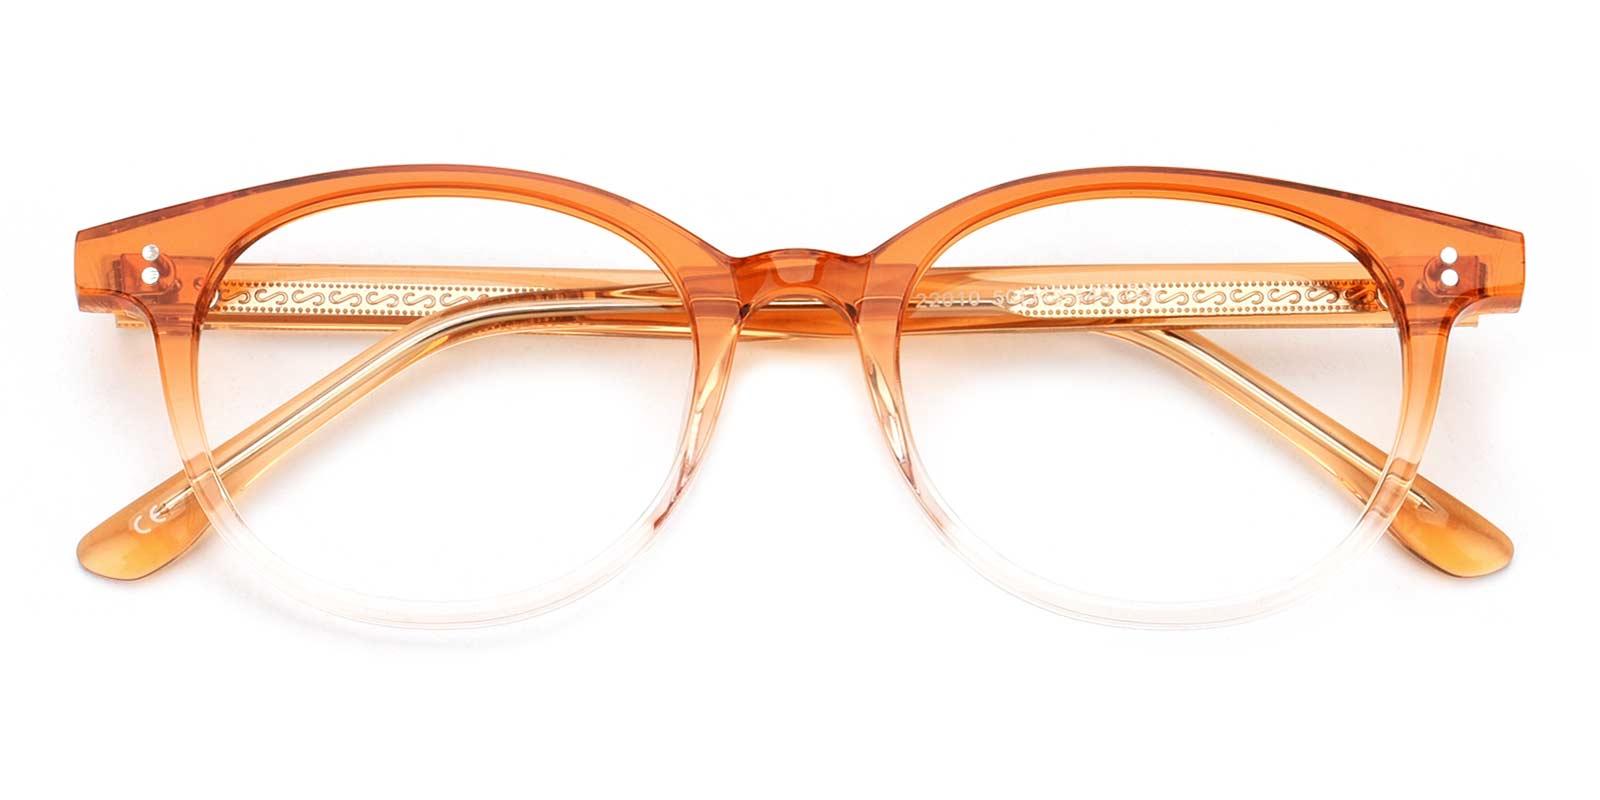 Barnat-Orange-Oval-Acetate-Eyeglasses-detail